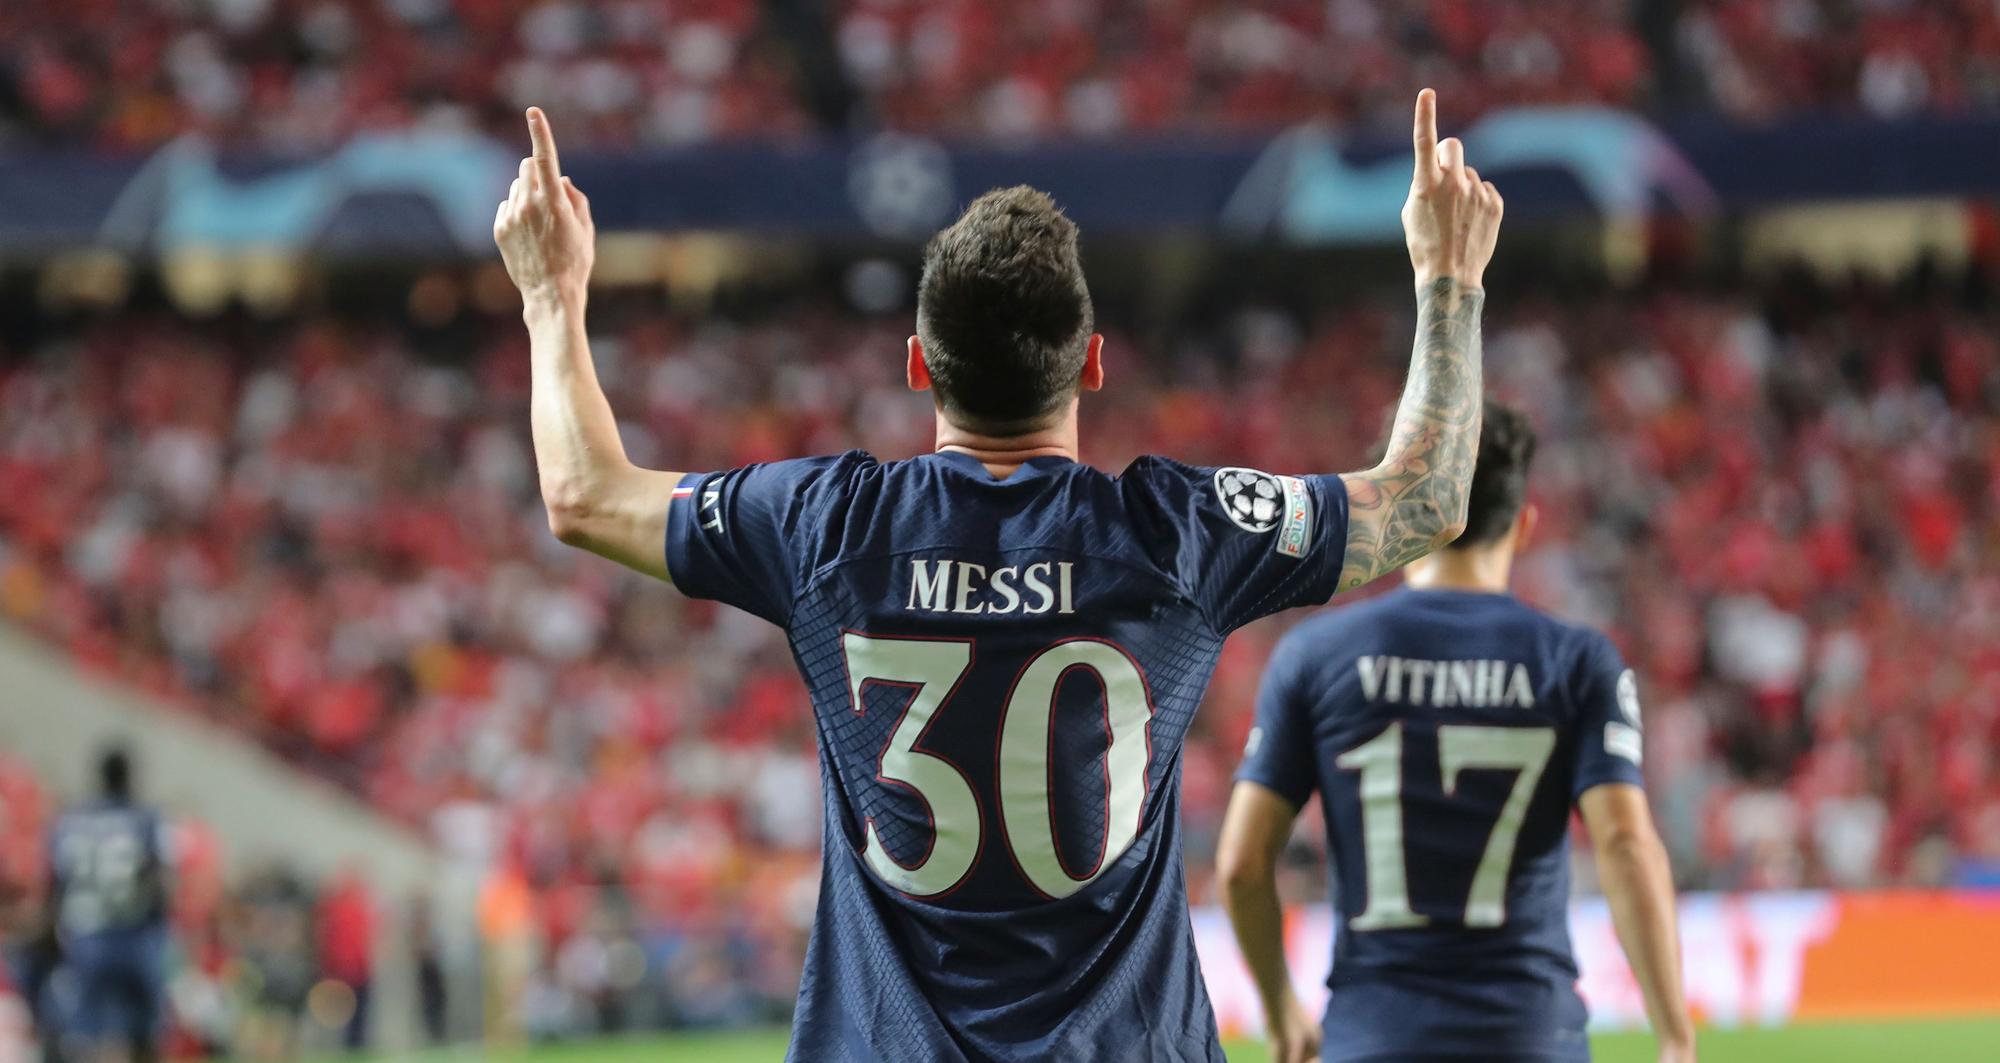 Messi celebrando un gol con el PSG contra el Maccabi Haifa